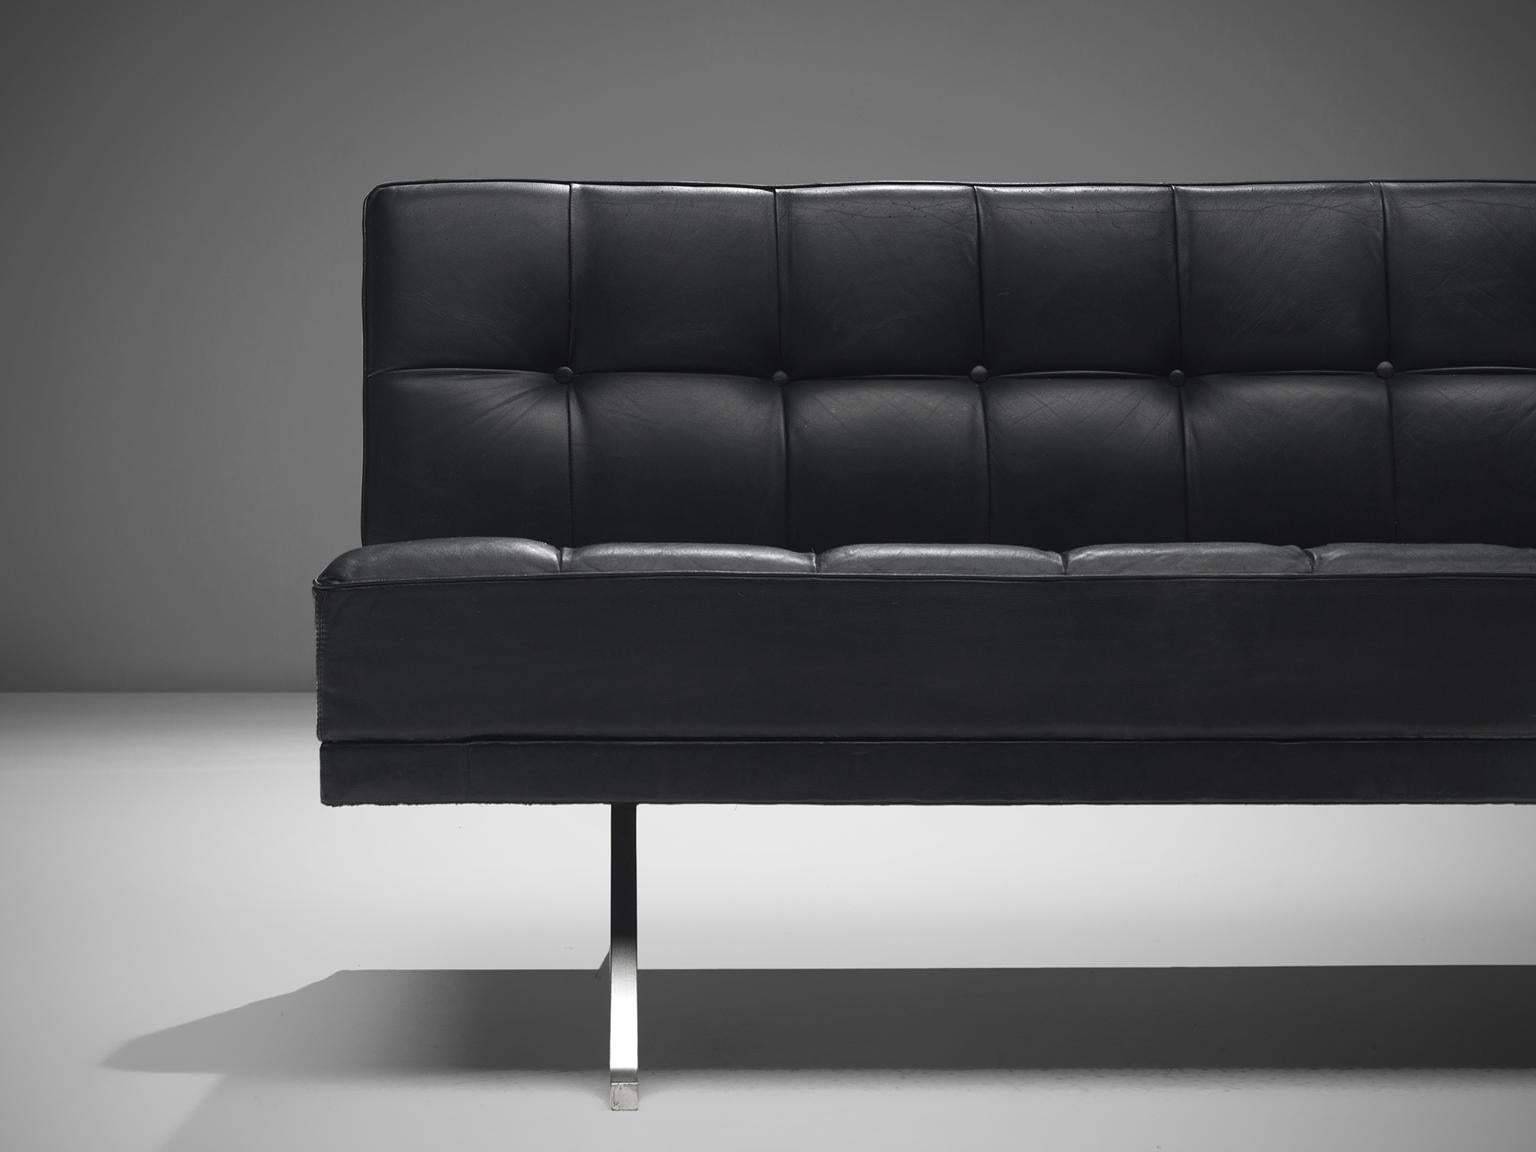 Johannes Spalt Pair of 'Constanze' Sofa in Black Leather (Stahl)